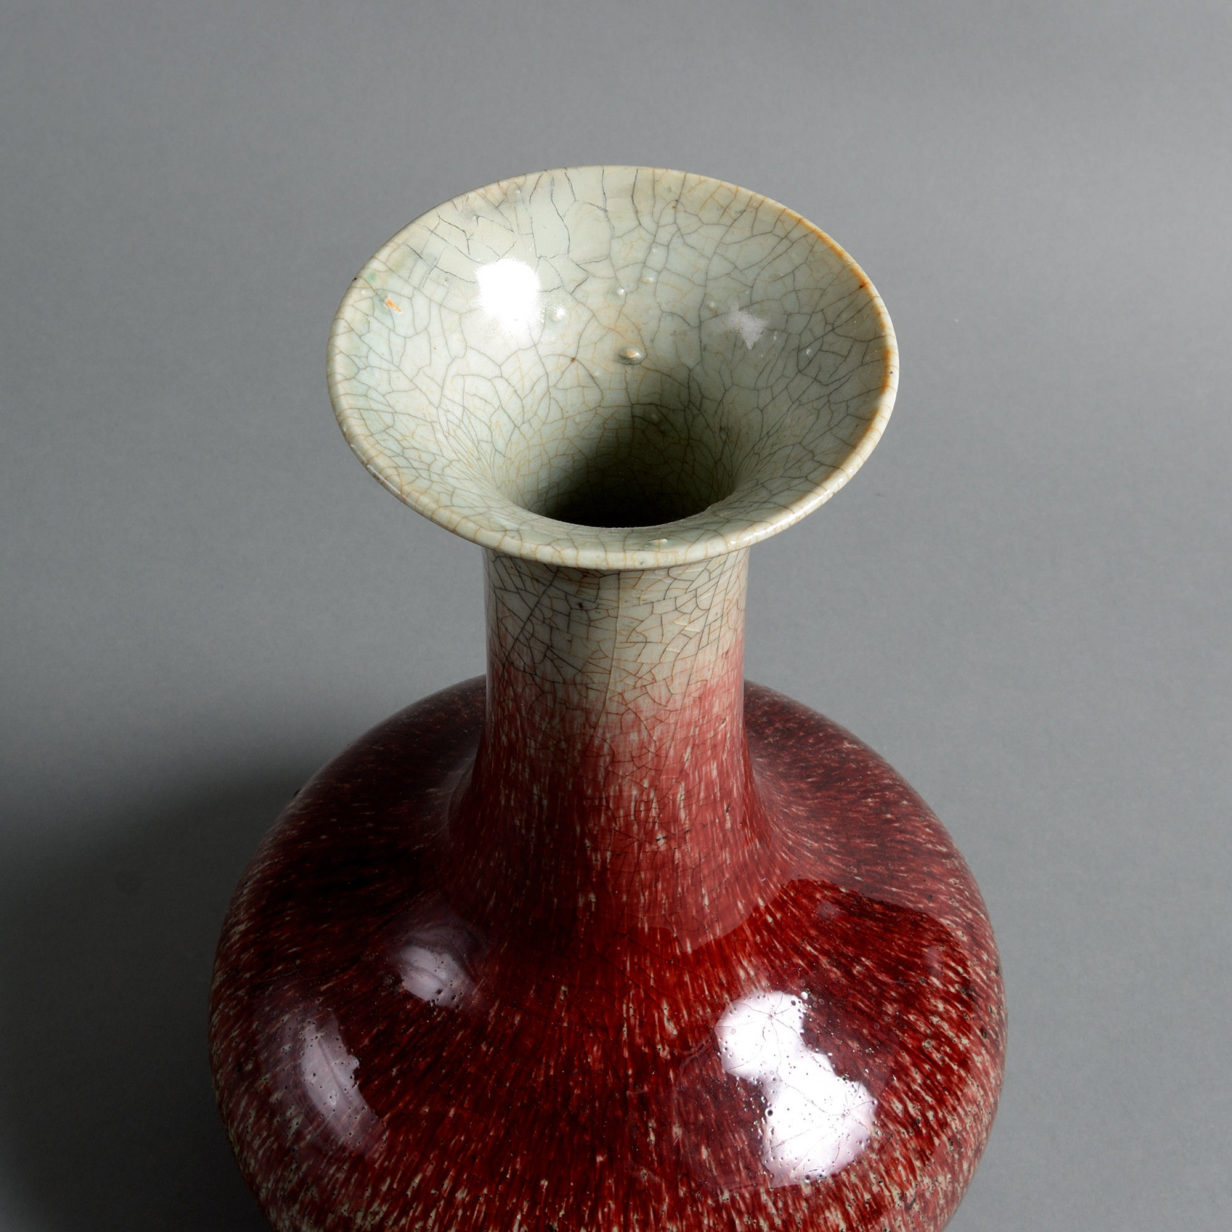 A 19th century qing dynasty sang de boeuf porcelain vase